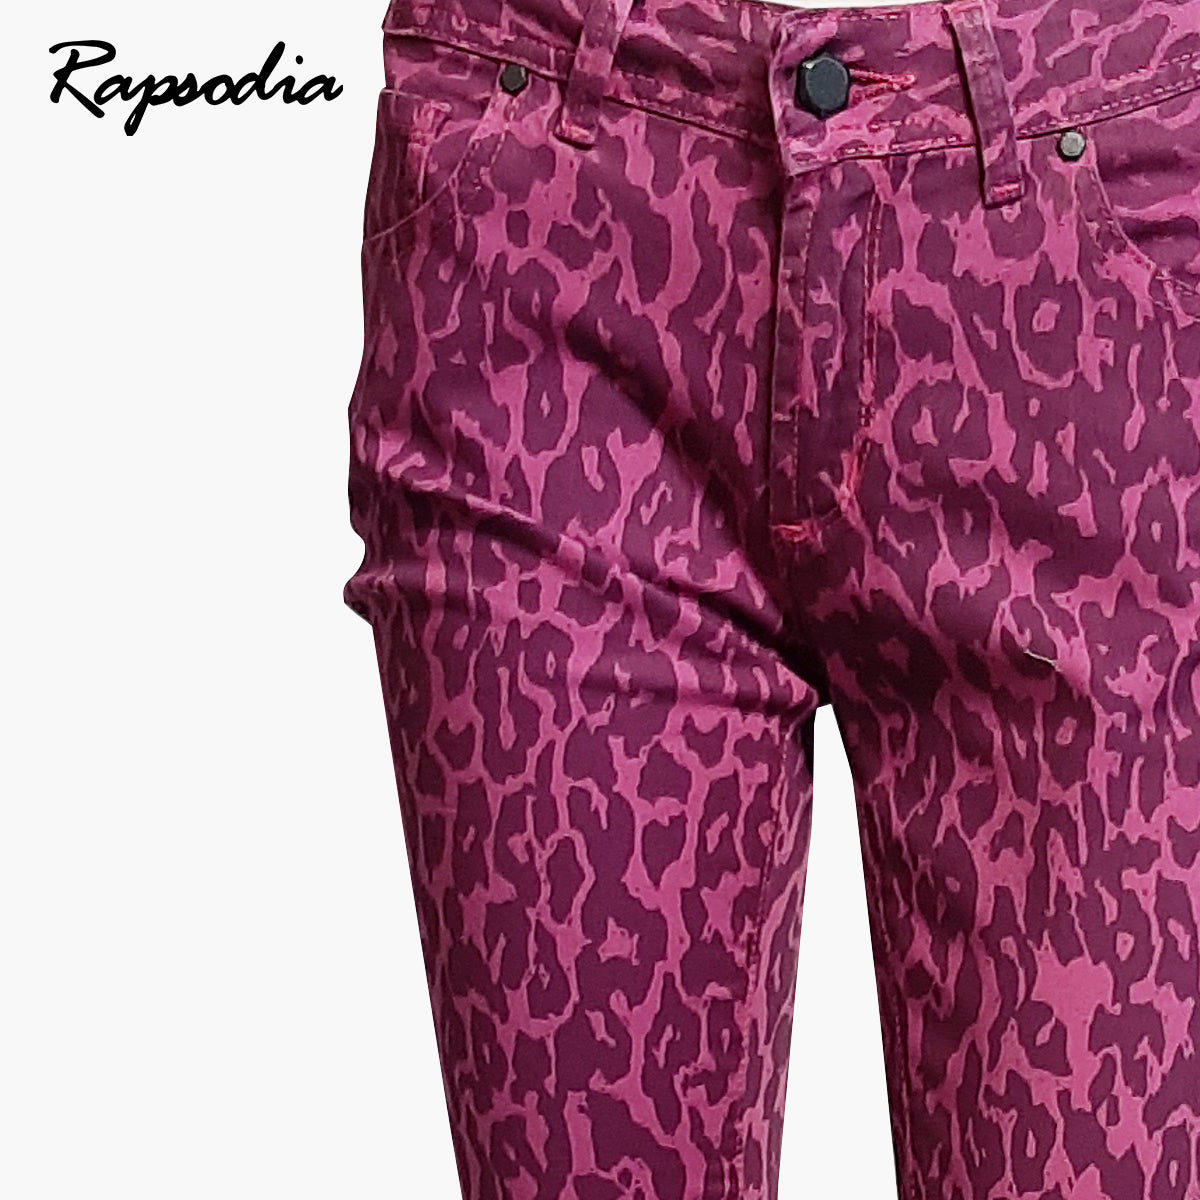 Jeans Rapsodia Queen Animal Colors Rosa